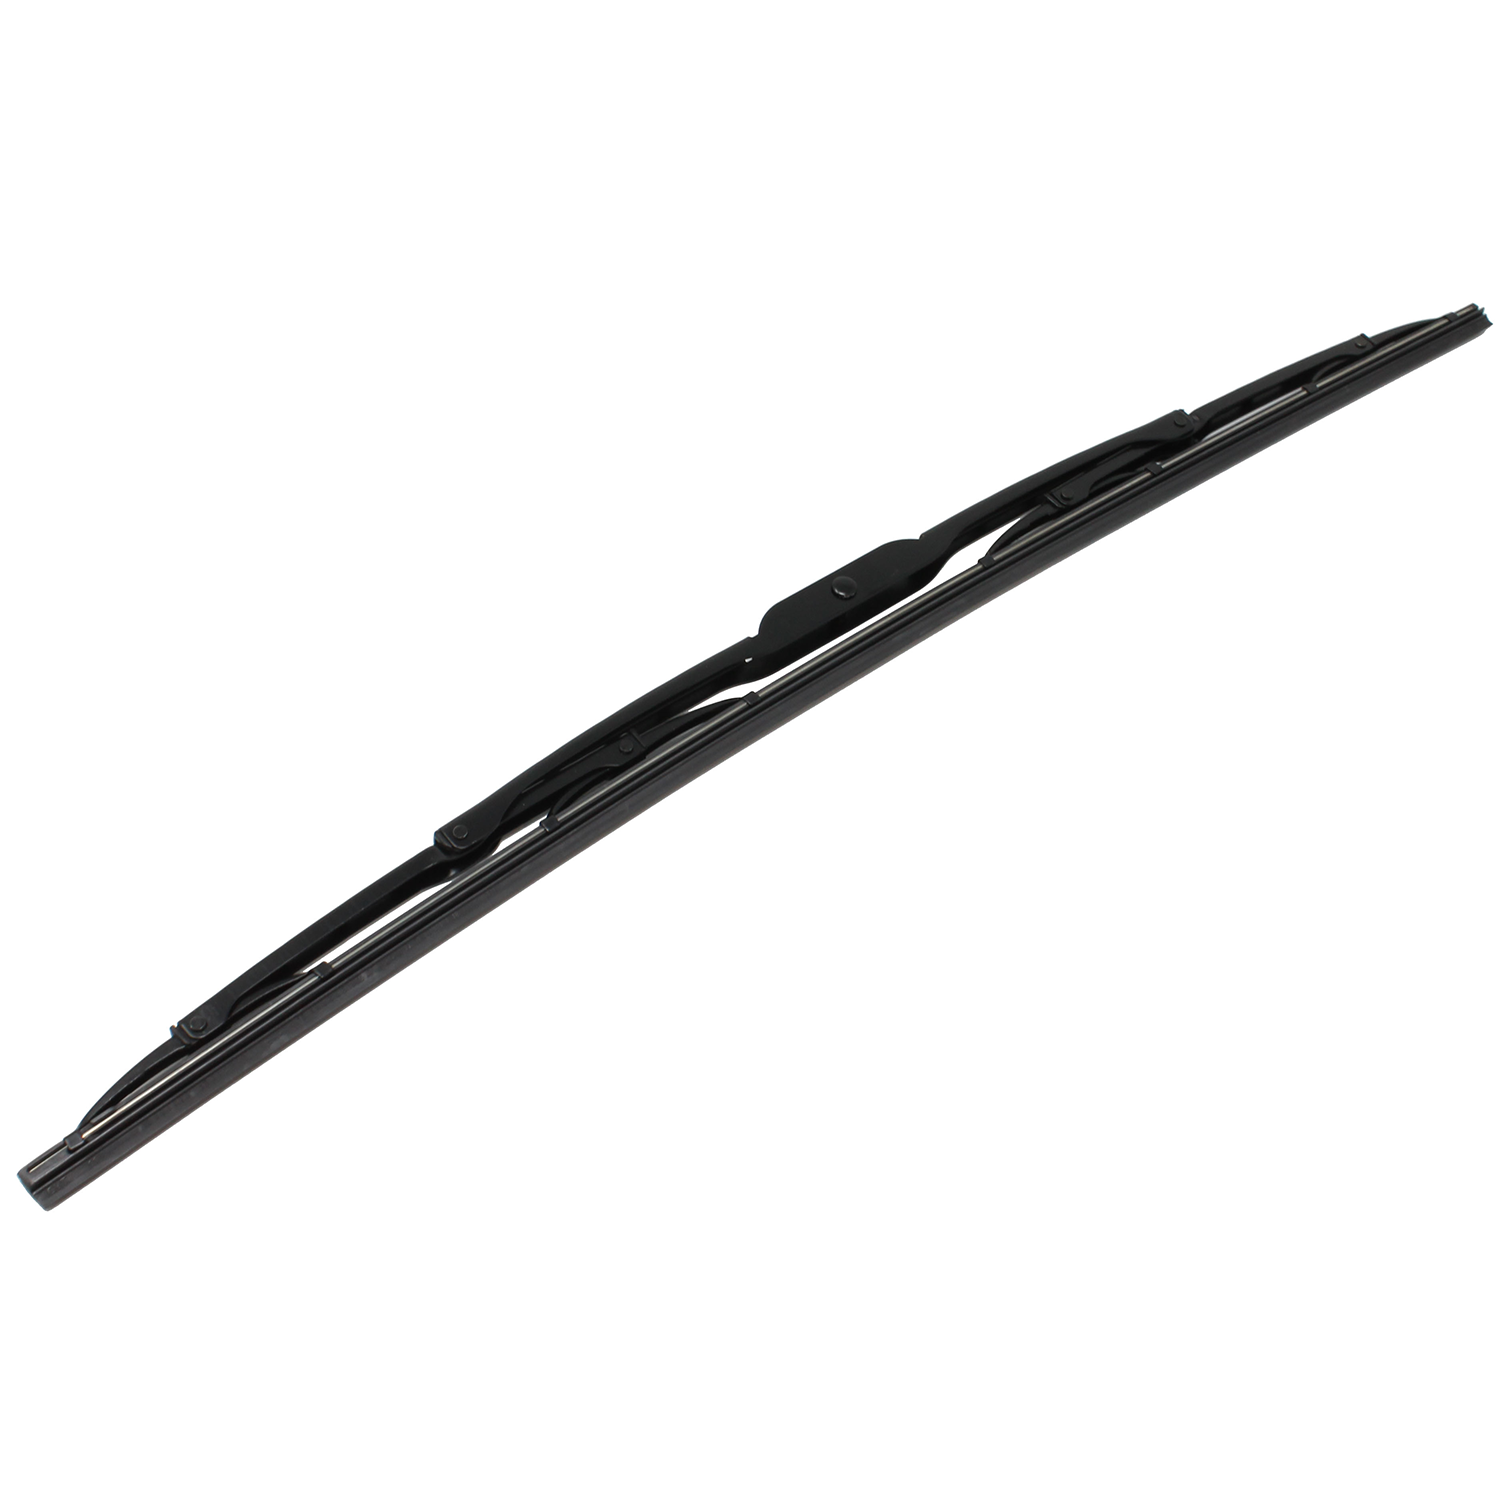 Duraforce 7188371 7188372, Windshield Wiper Arm & Wiper Blade Kit For Bobcat